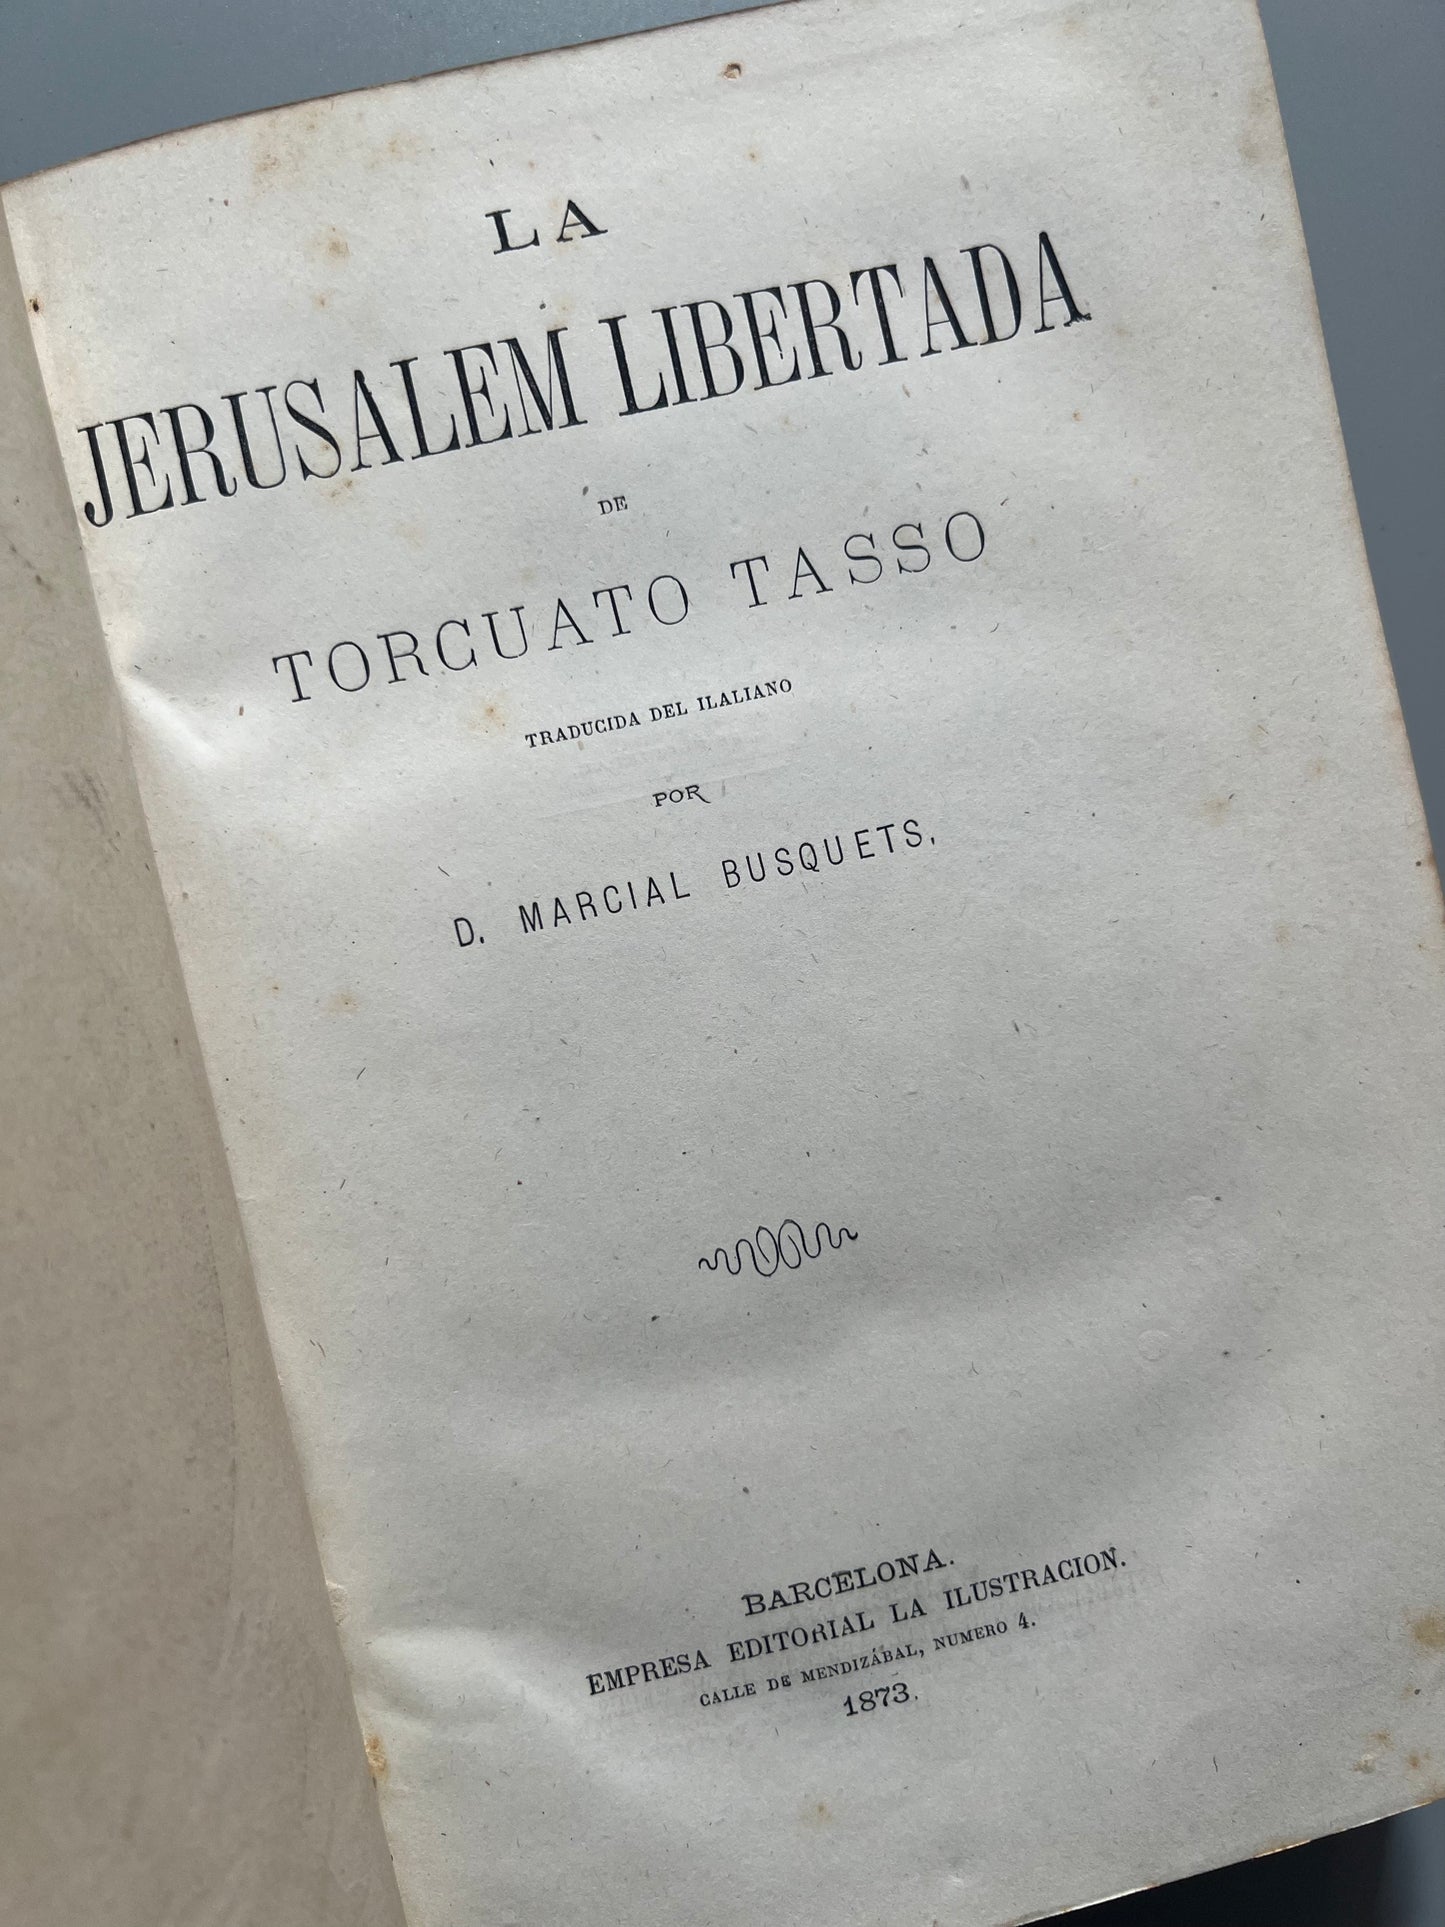 La Jerusalem libertada, Torcuato Tasso - Empresa editorial La Ilustración, 1873